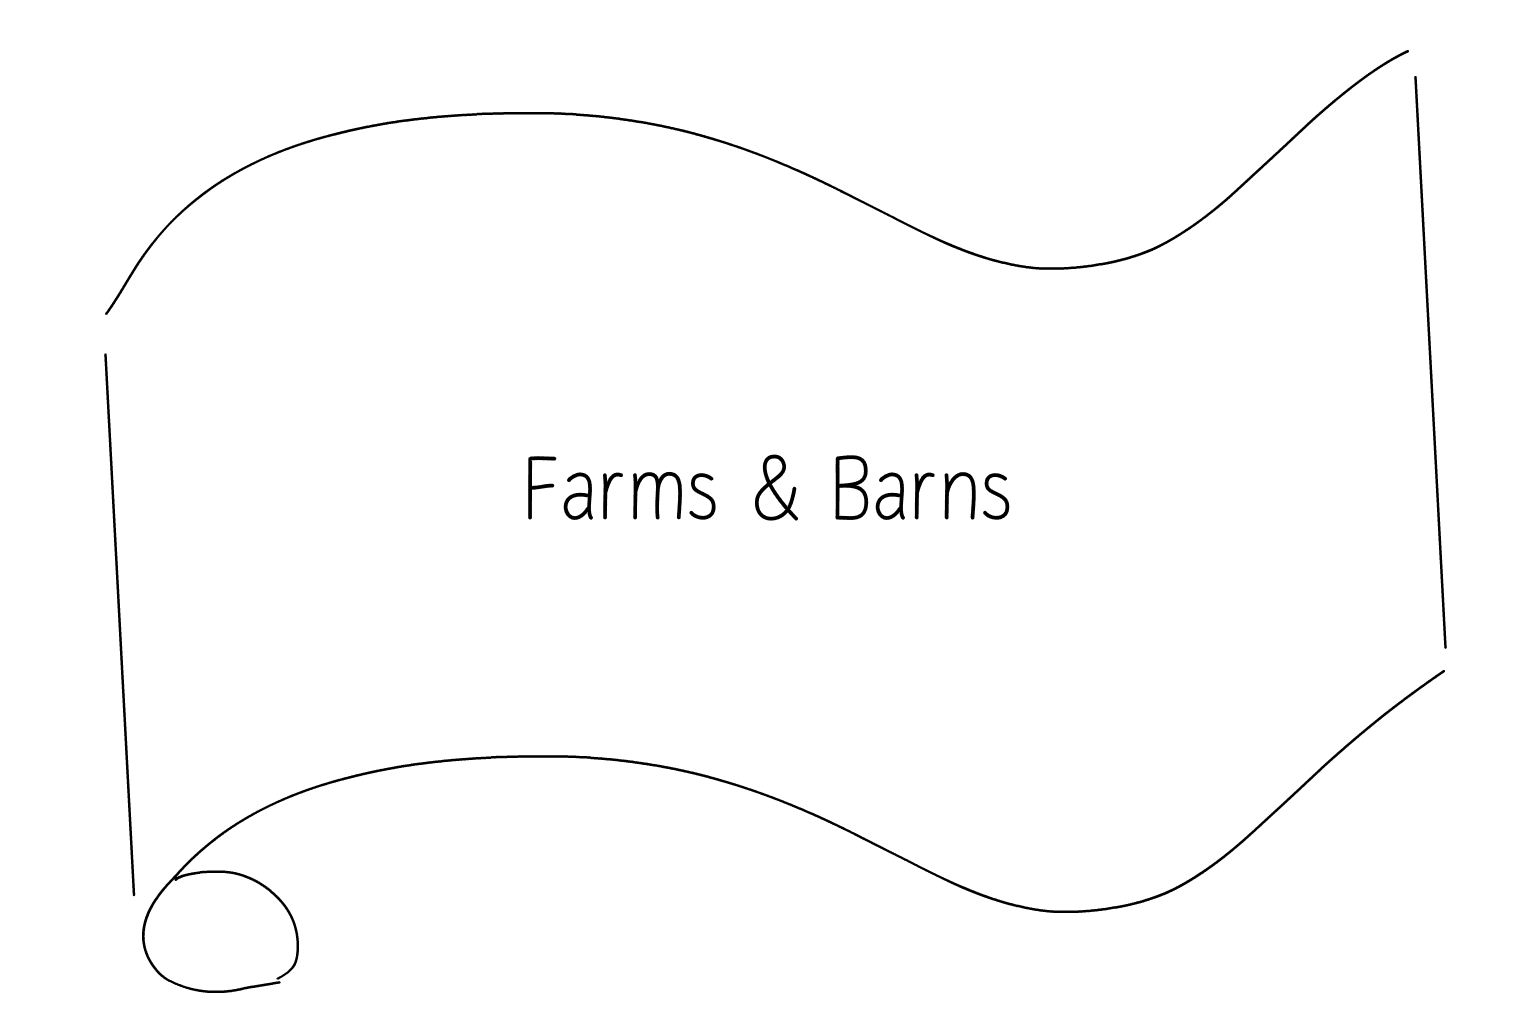 Illustration of Farms & Barns